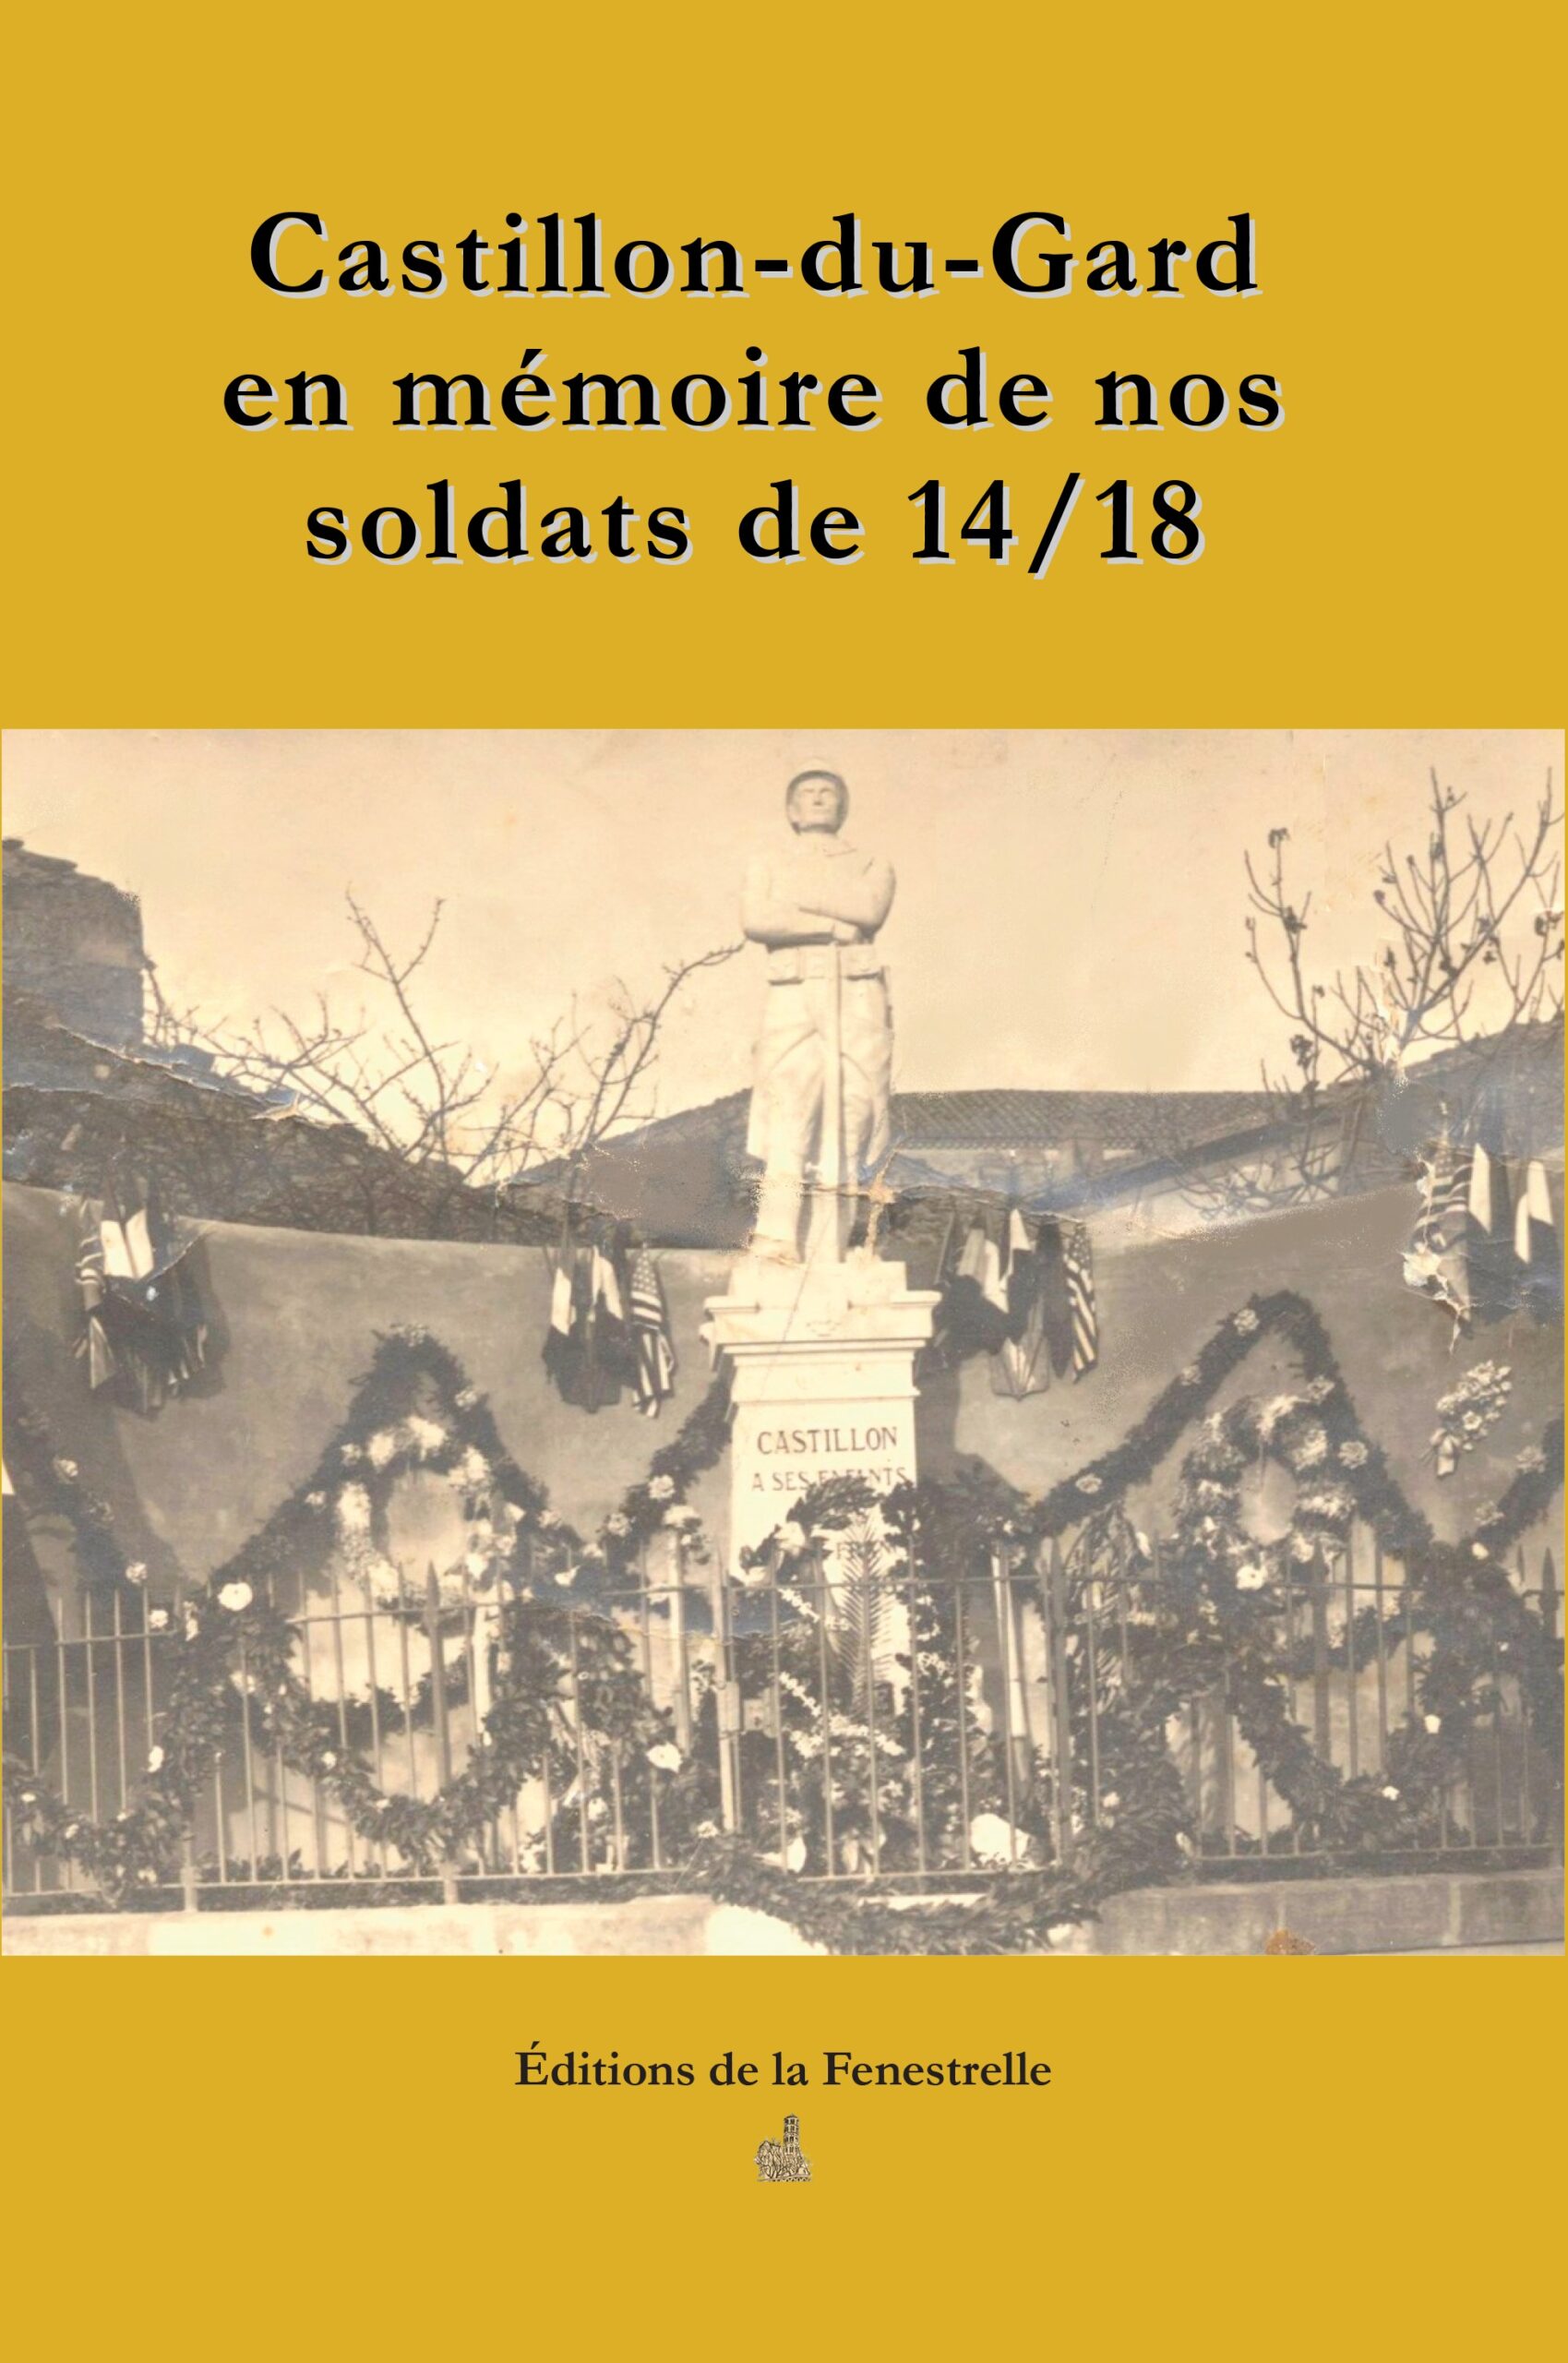 Castillon-du-Gard en mémoire de nos soldats de 14/18 - Editions de la Fenestrelle